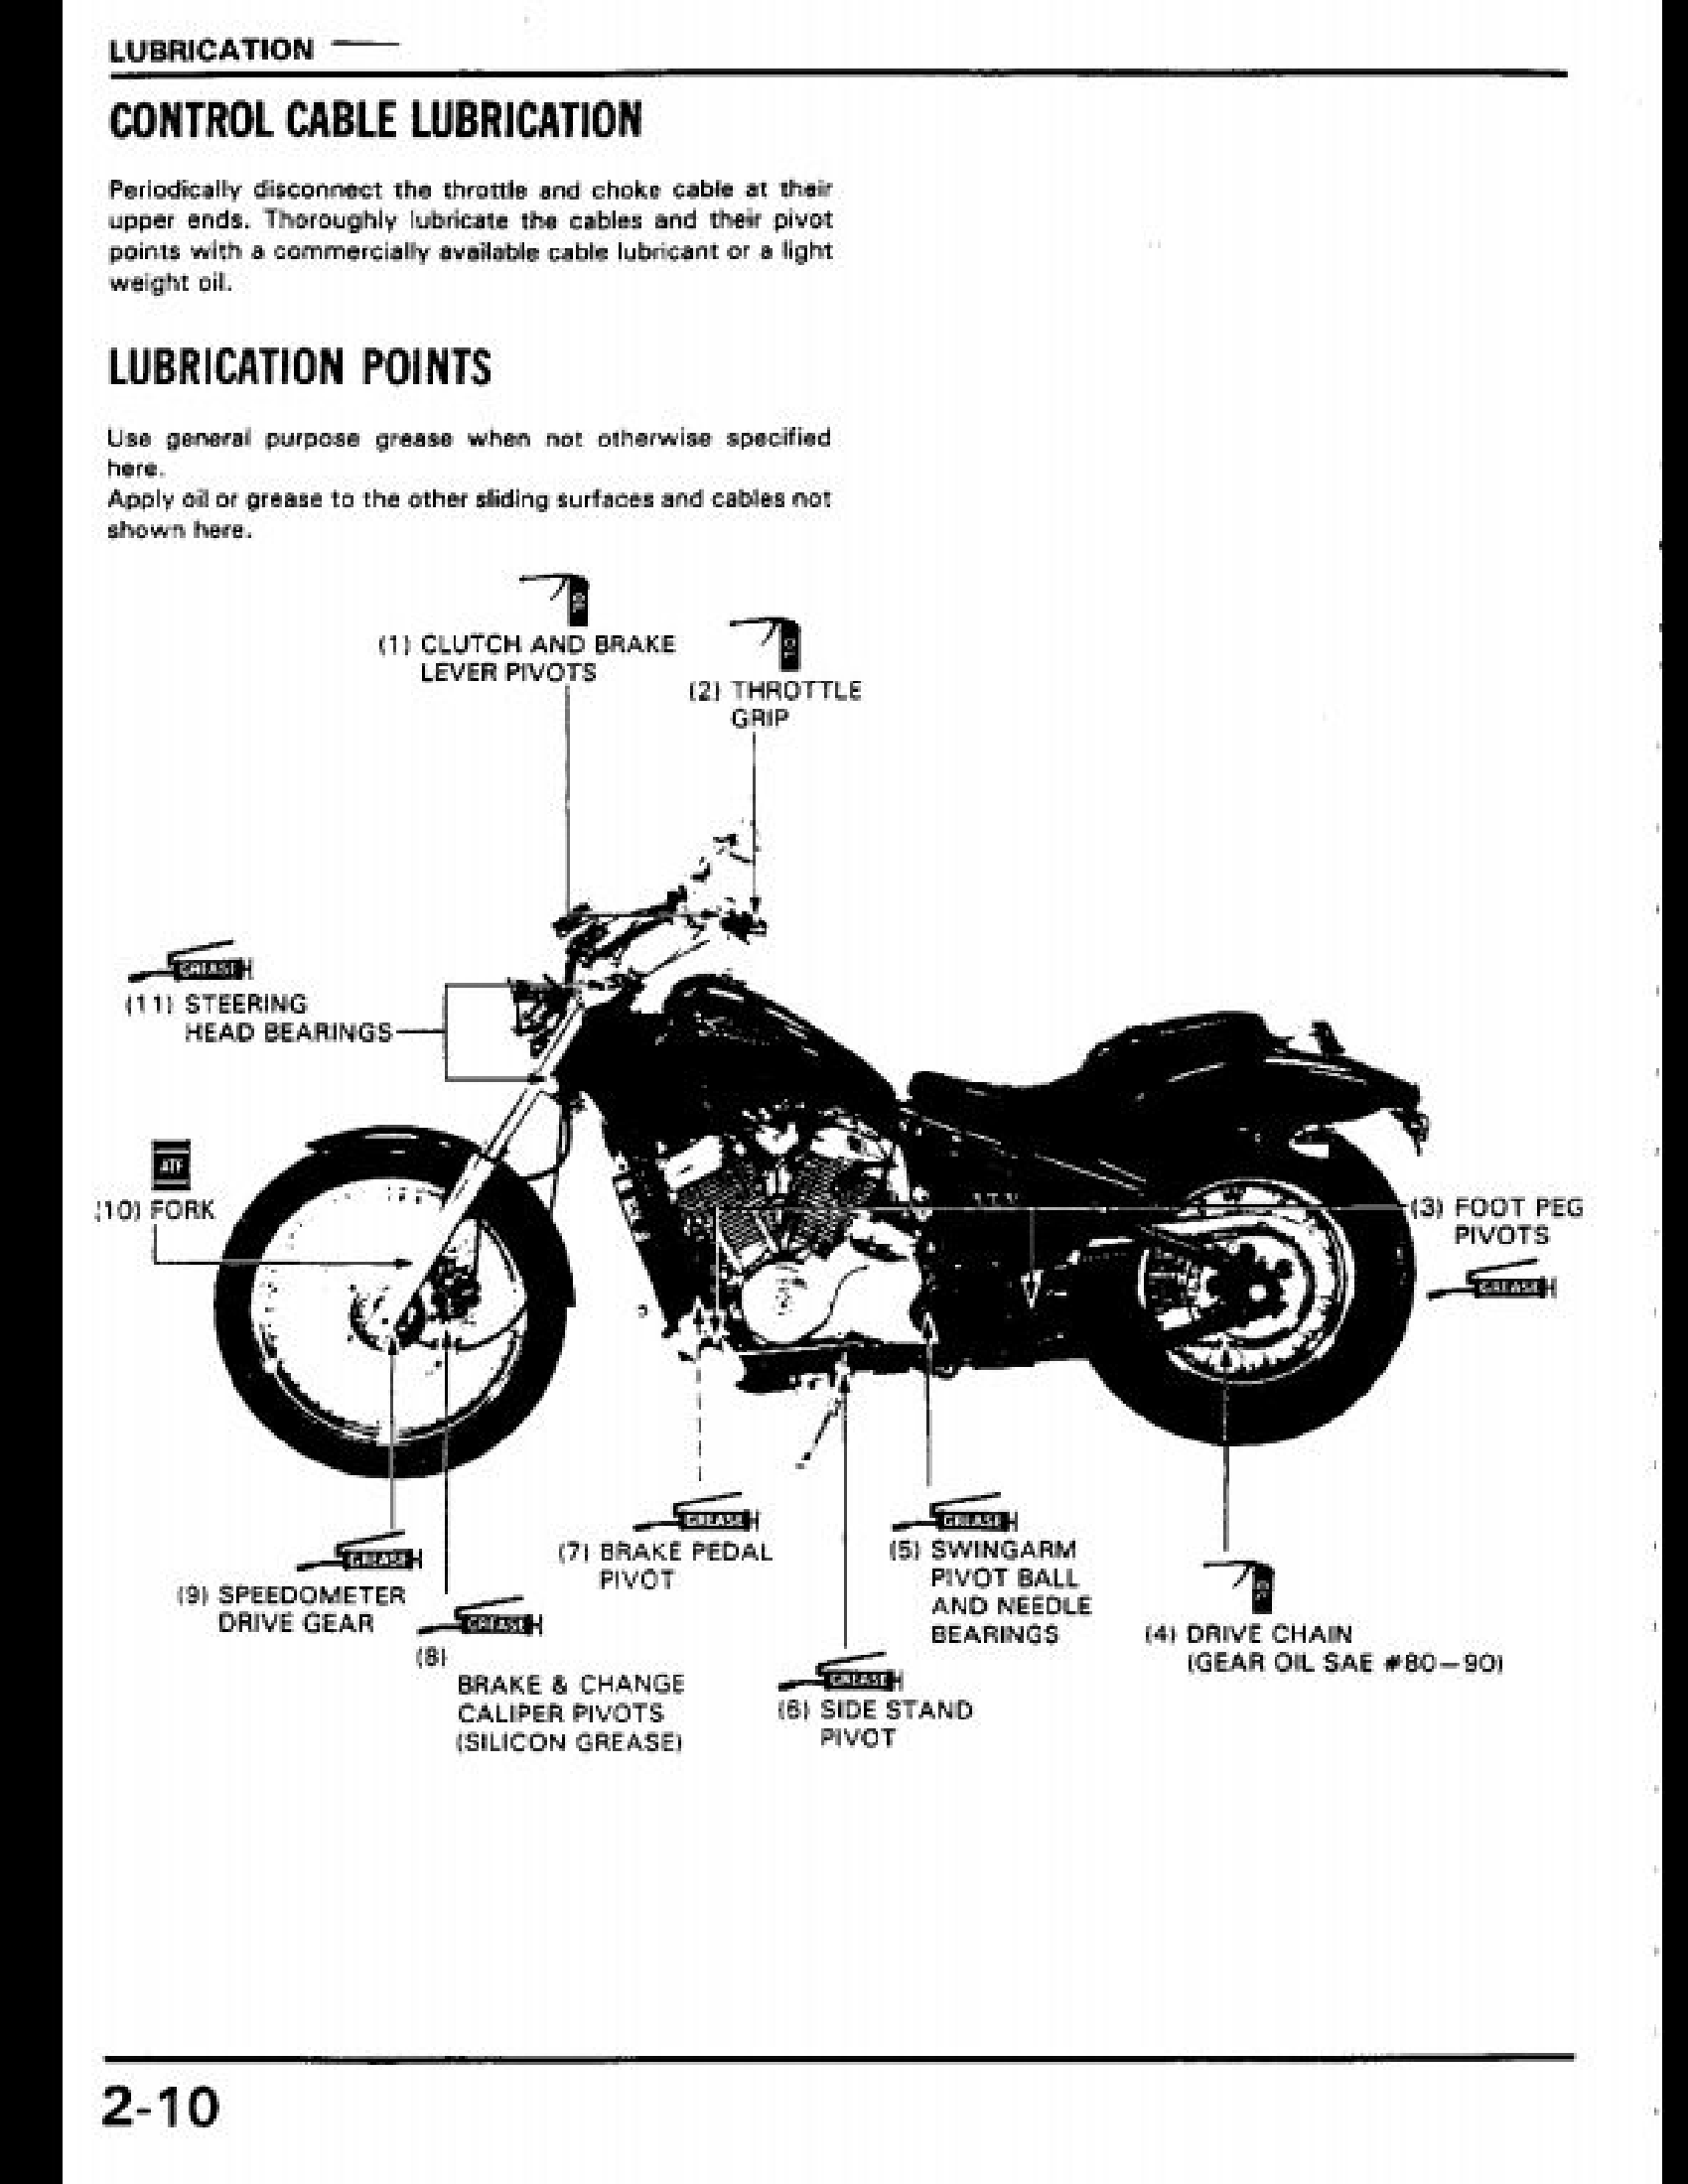 Honda VT600C Motocycle manual